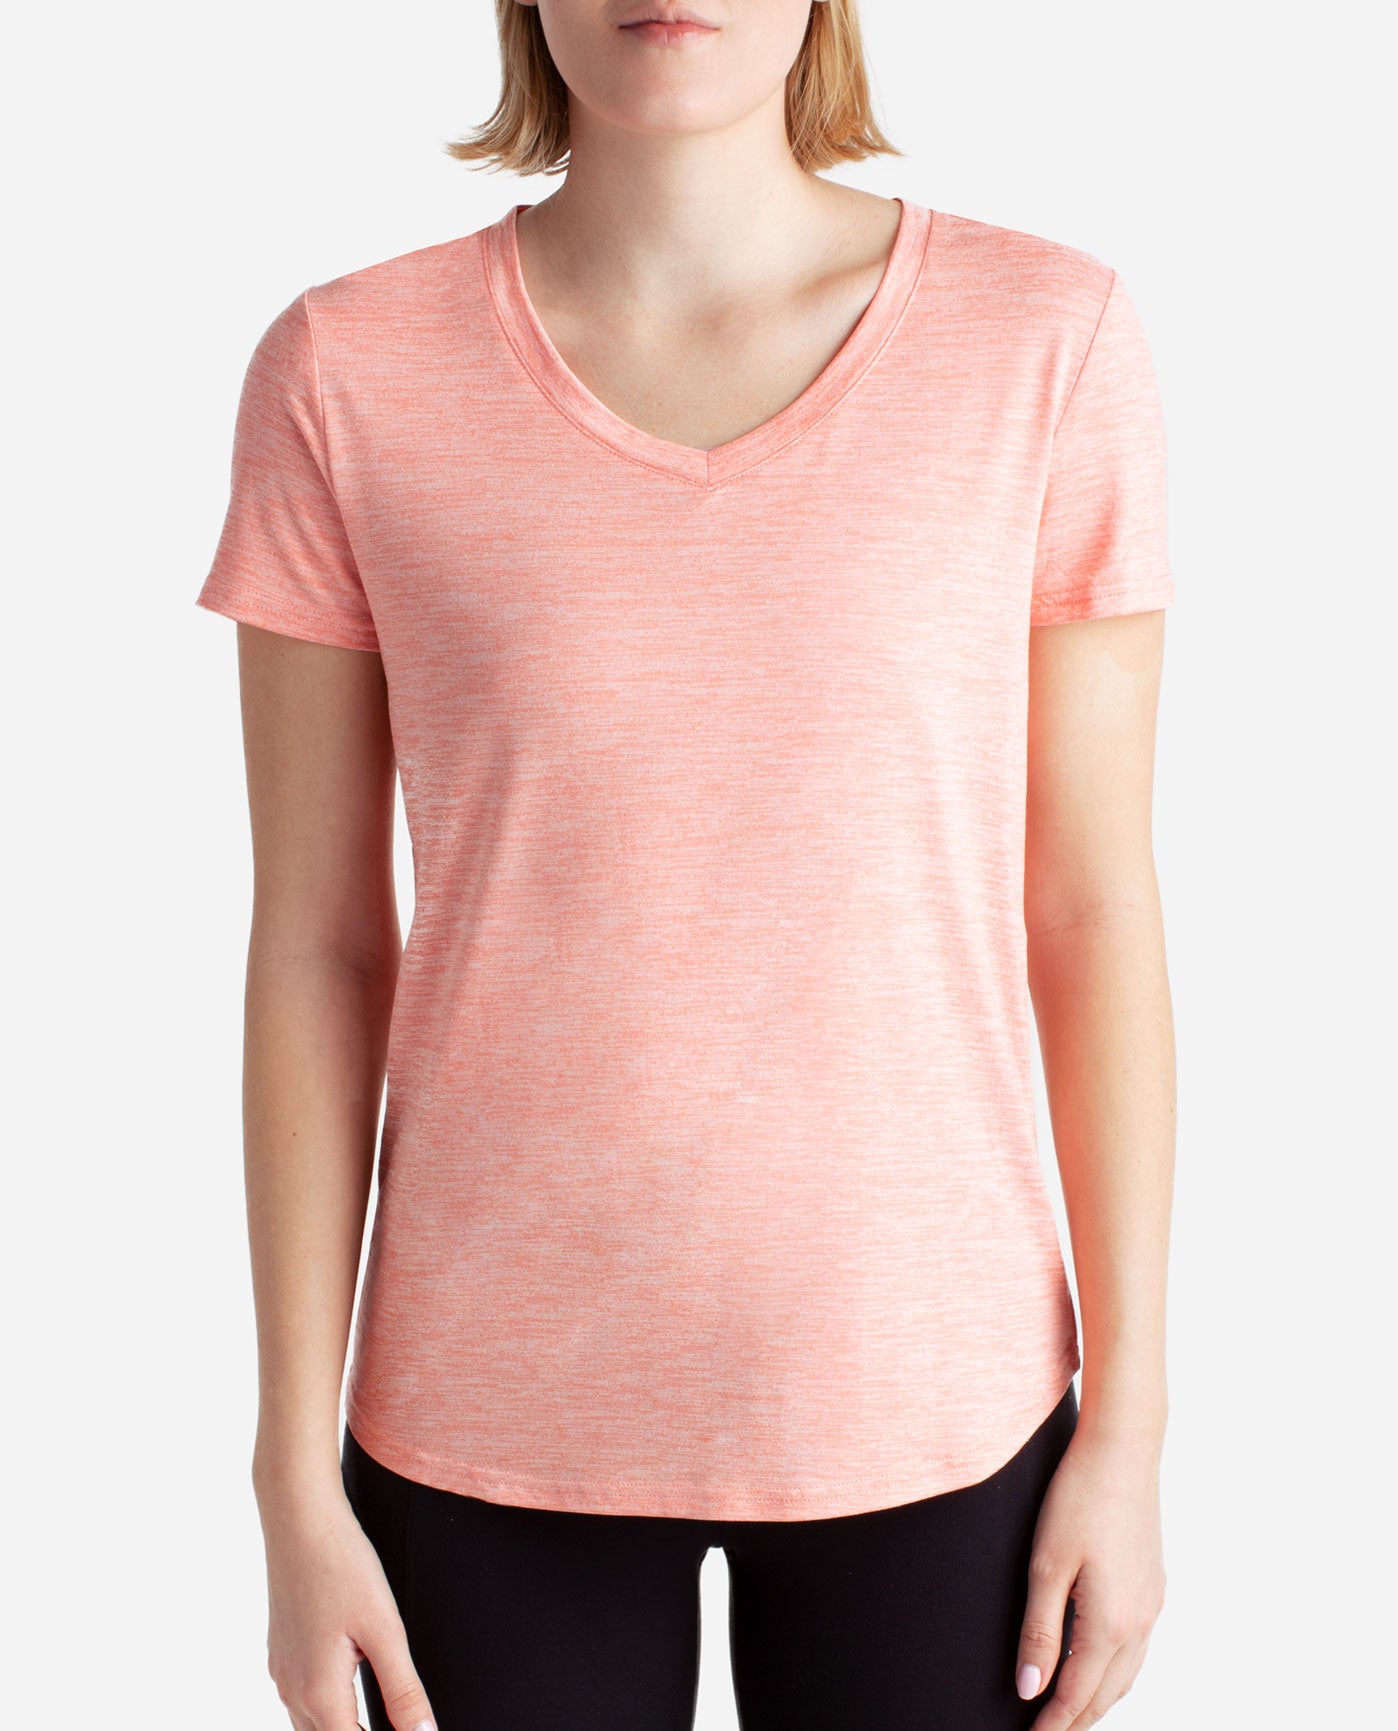 Danskin Now 100% Polyester Color Block Stripes Pink Active T-Shirt Size XXL  - 42% off